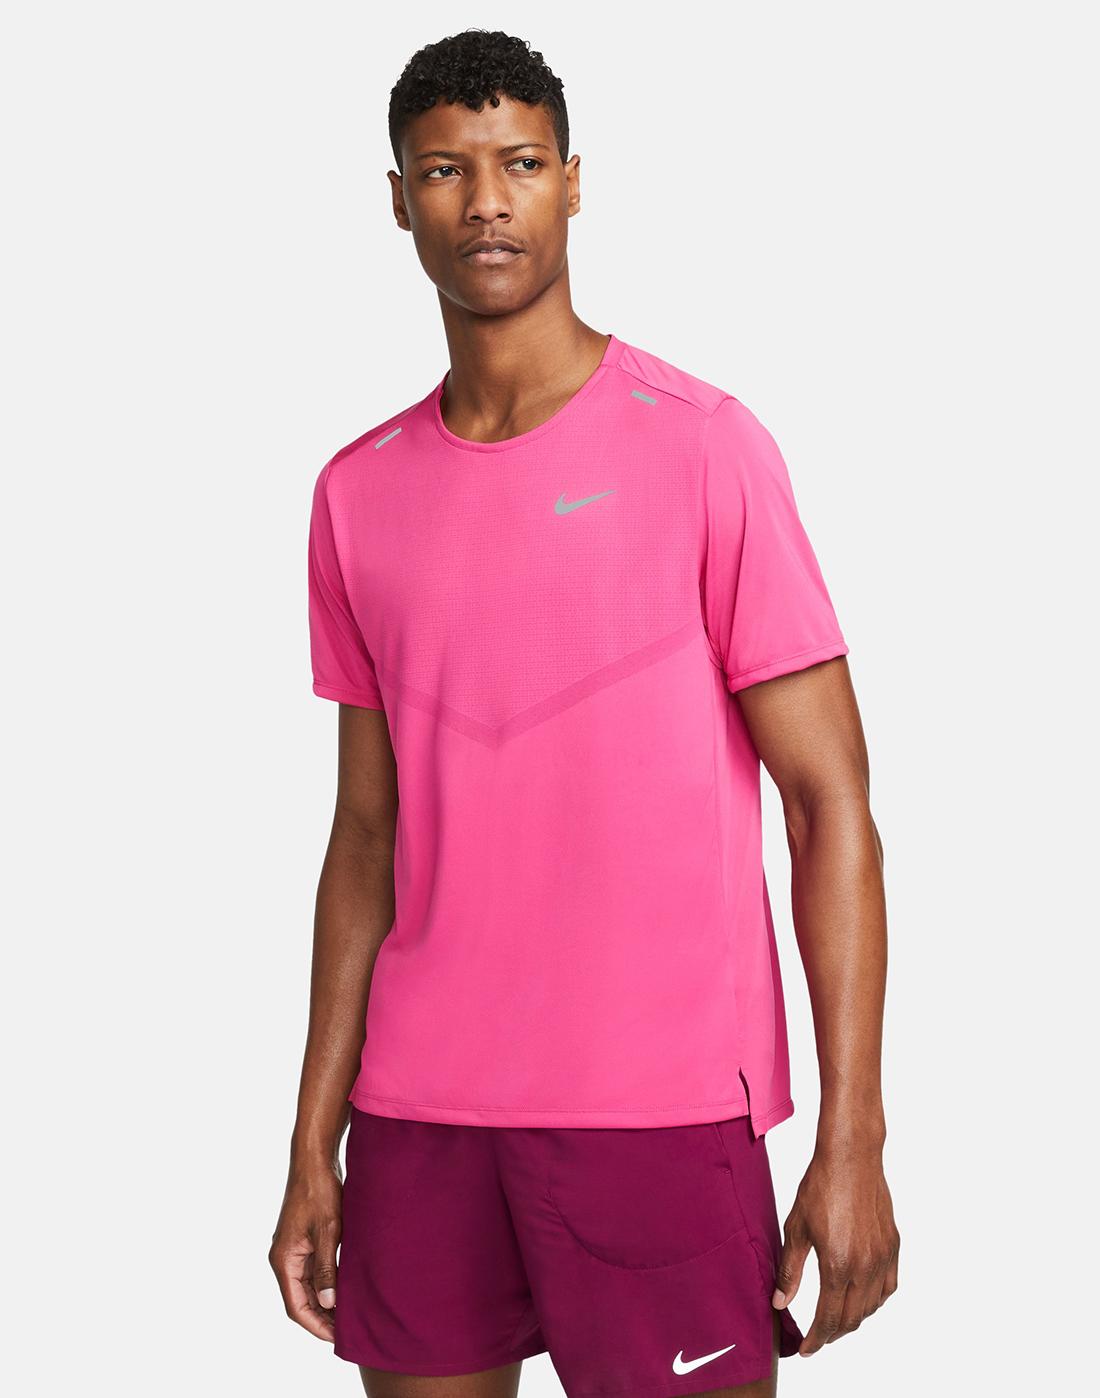 Nike Mens Rise 365 T-Shirt - Pink | Life Style Sports UK